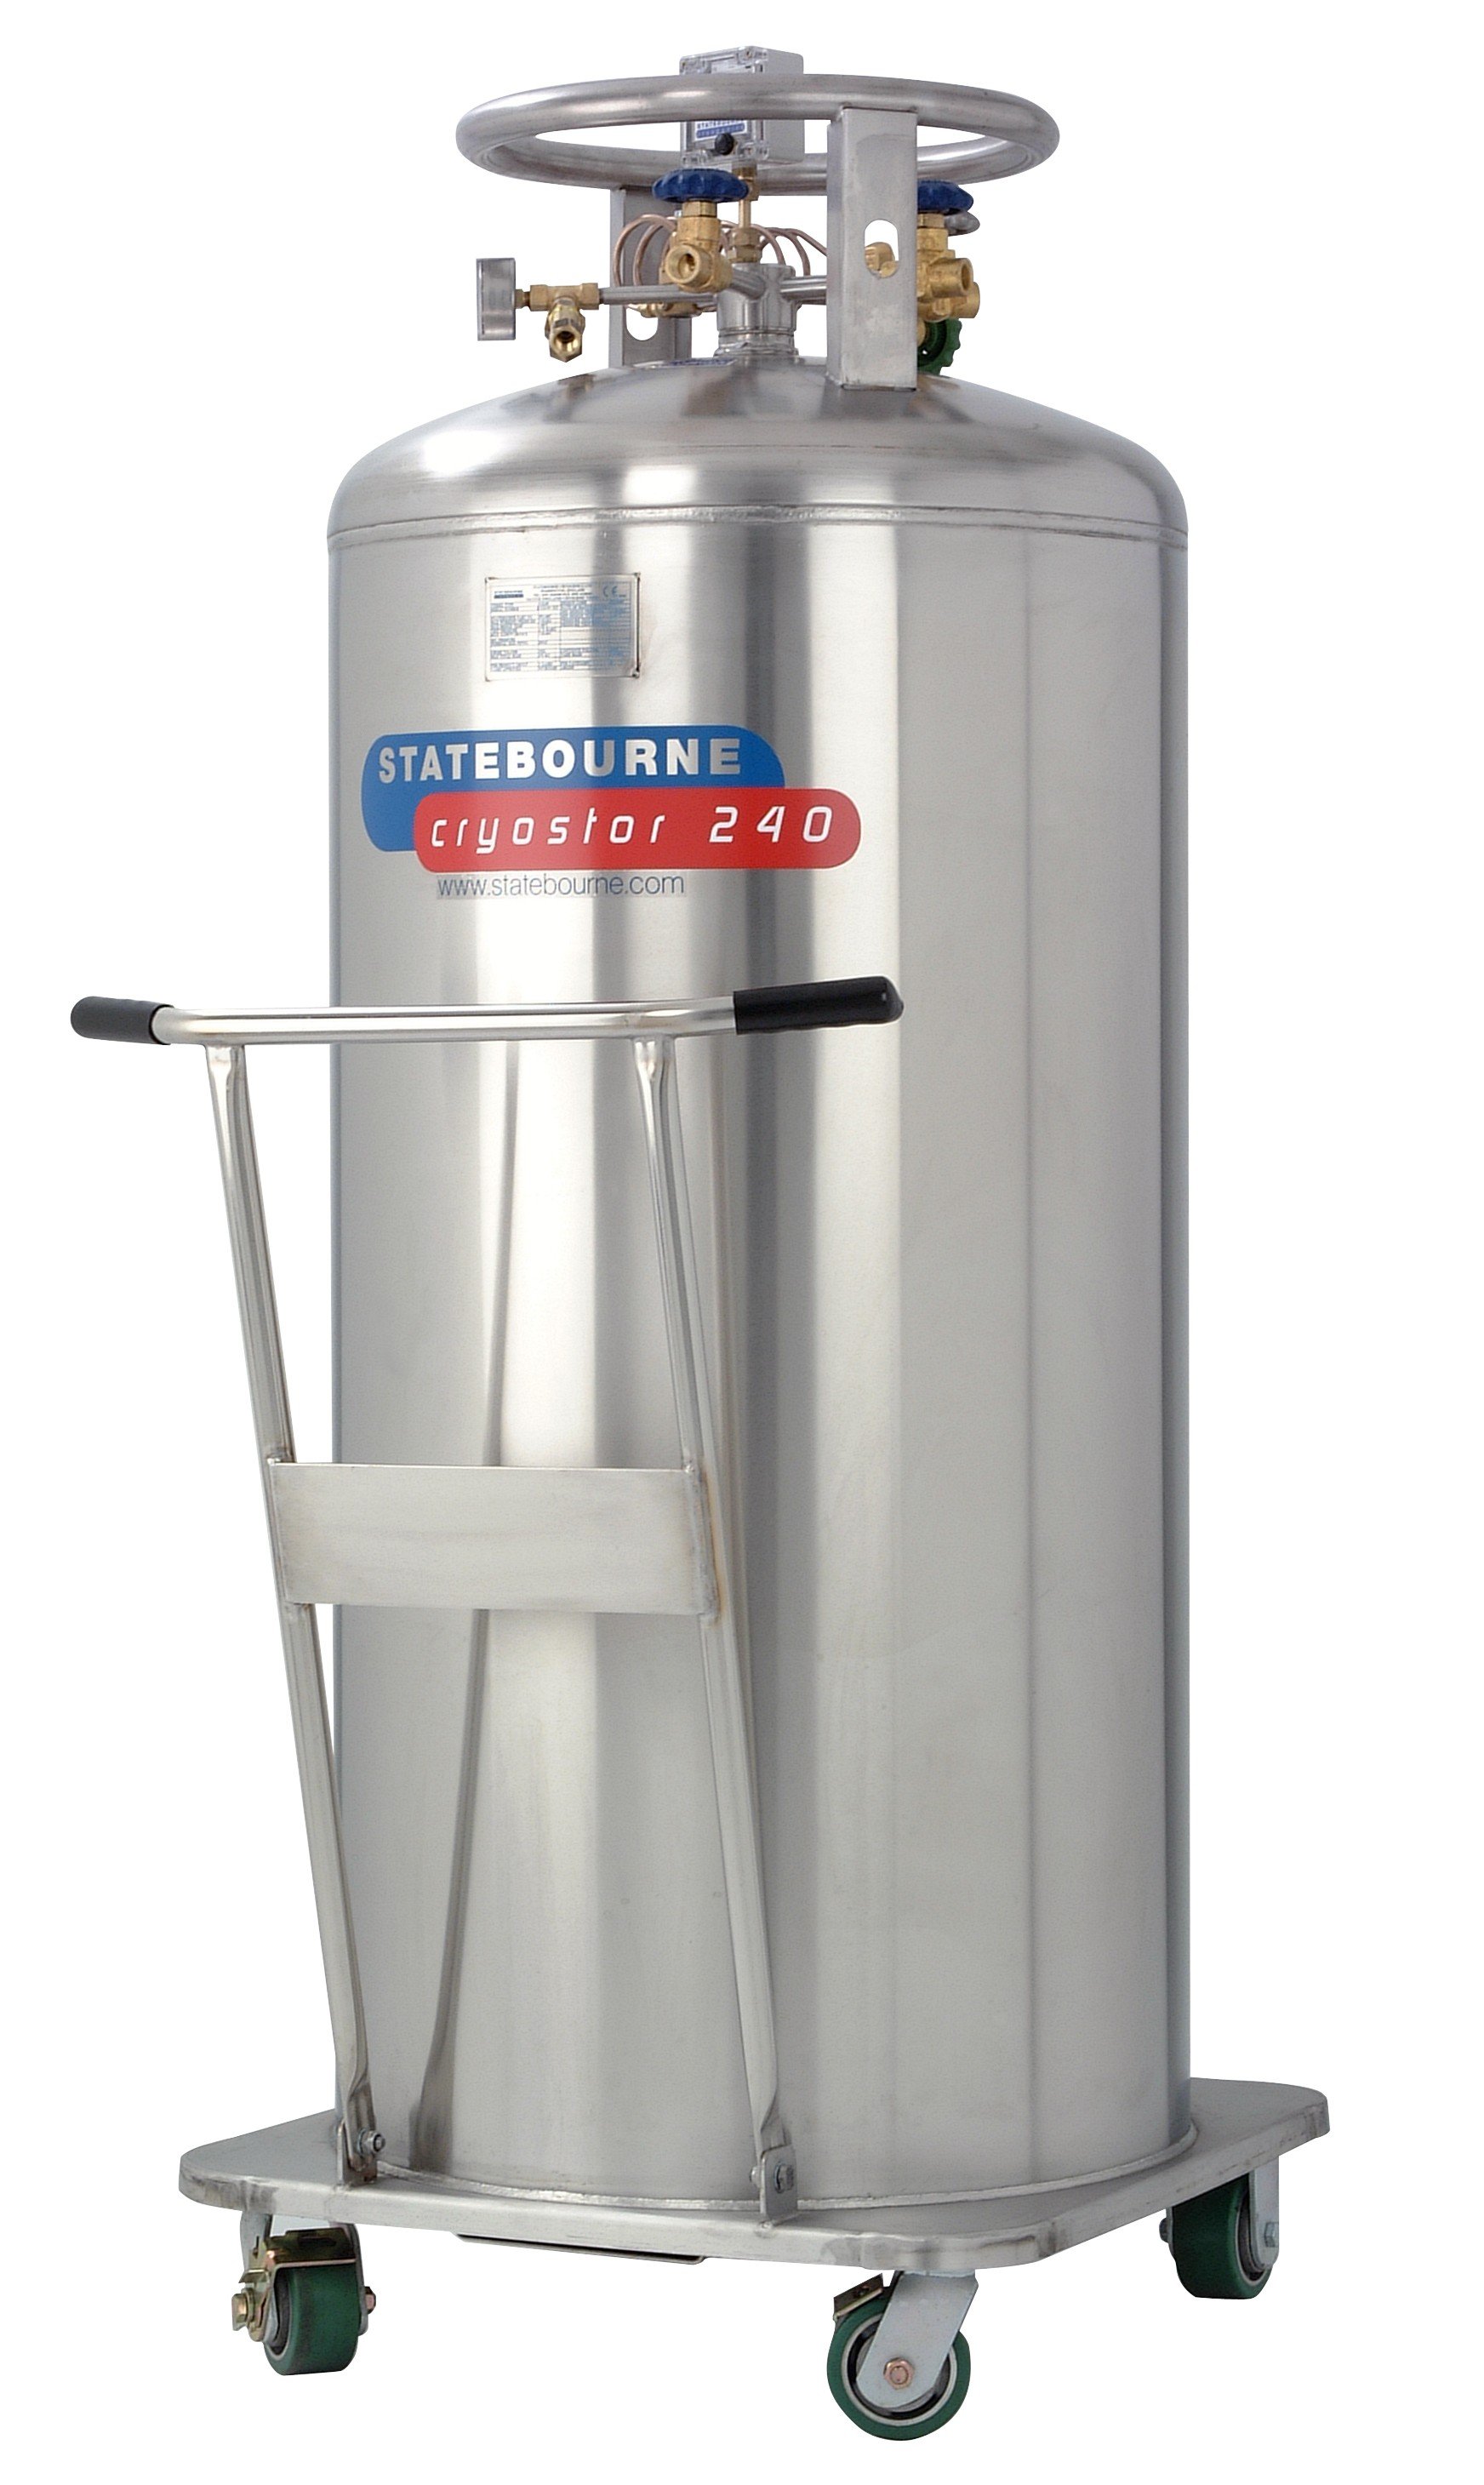 Statebourne Cryogenics 9911087 Cryostor 240 Stainless Steel Low Pressure LN2 Dewars 240 Litres for storage and dispensing liquid nitrogen